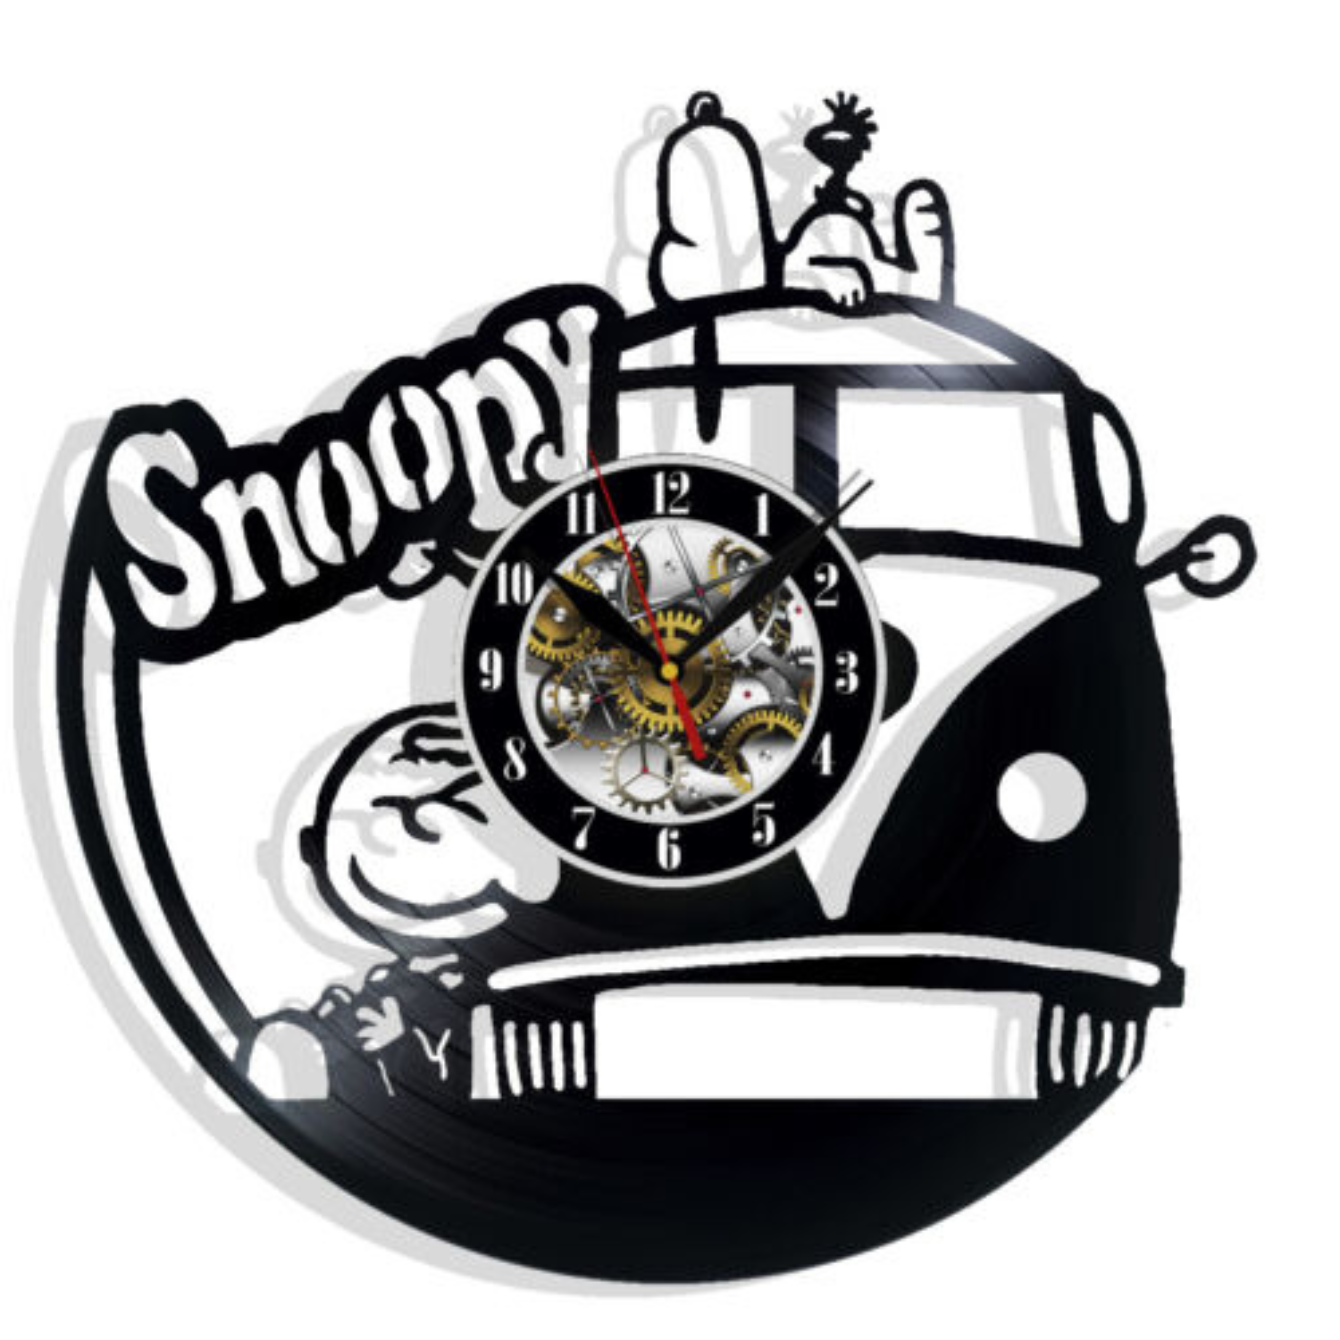 Snoopy Wall Clock